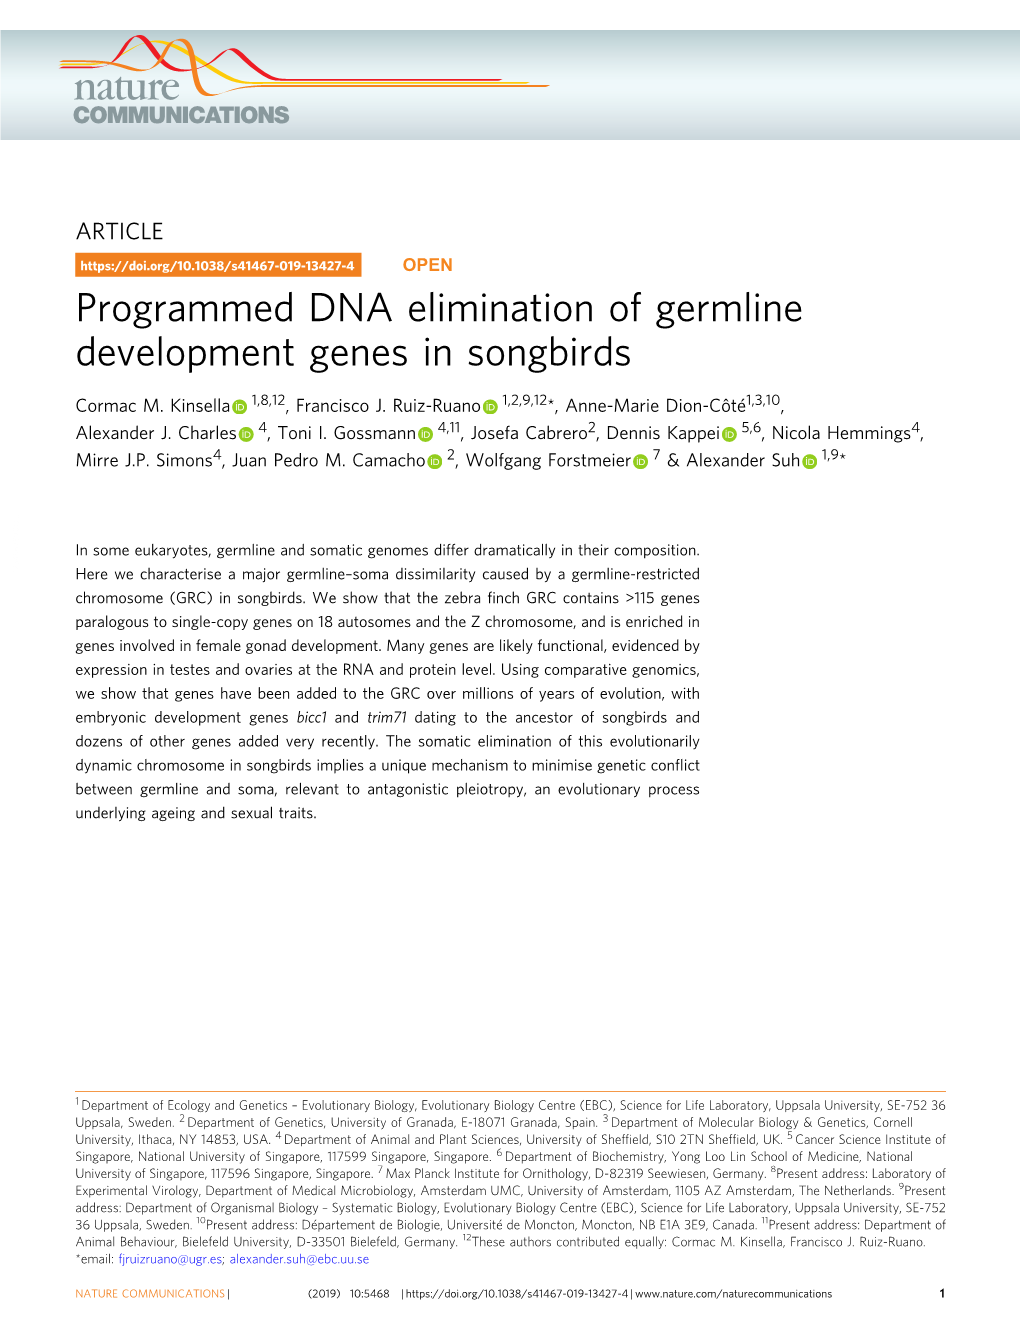 Programmed DNA Elimination of Germline Development Genes in Songbirds